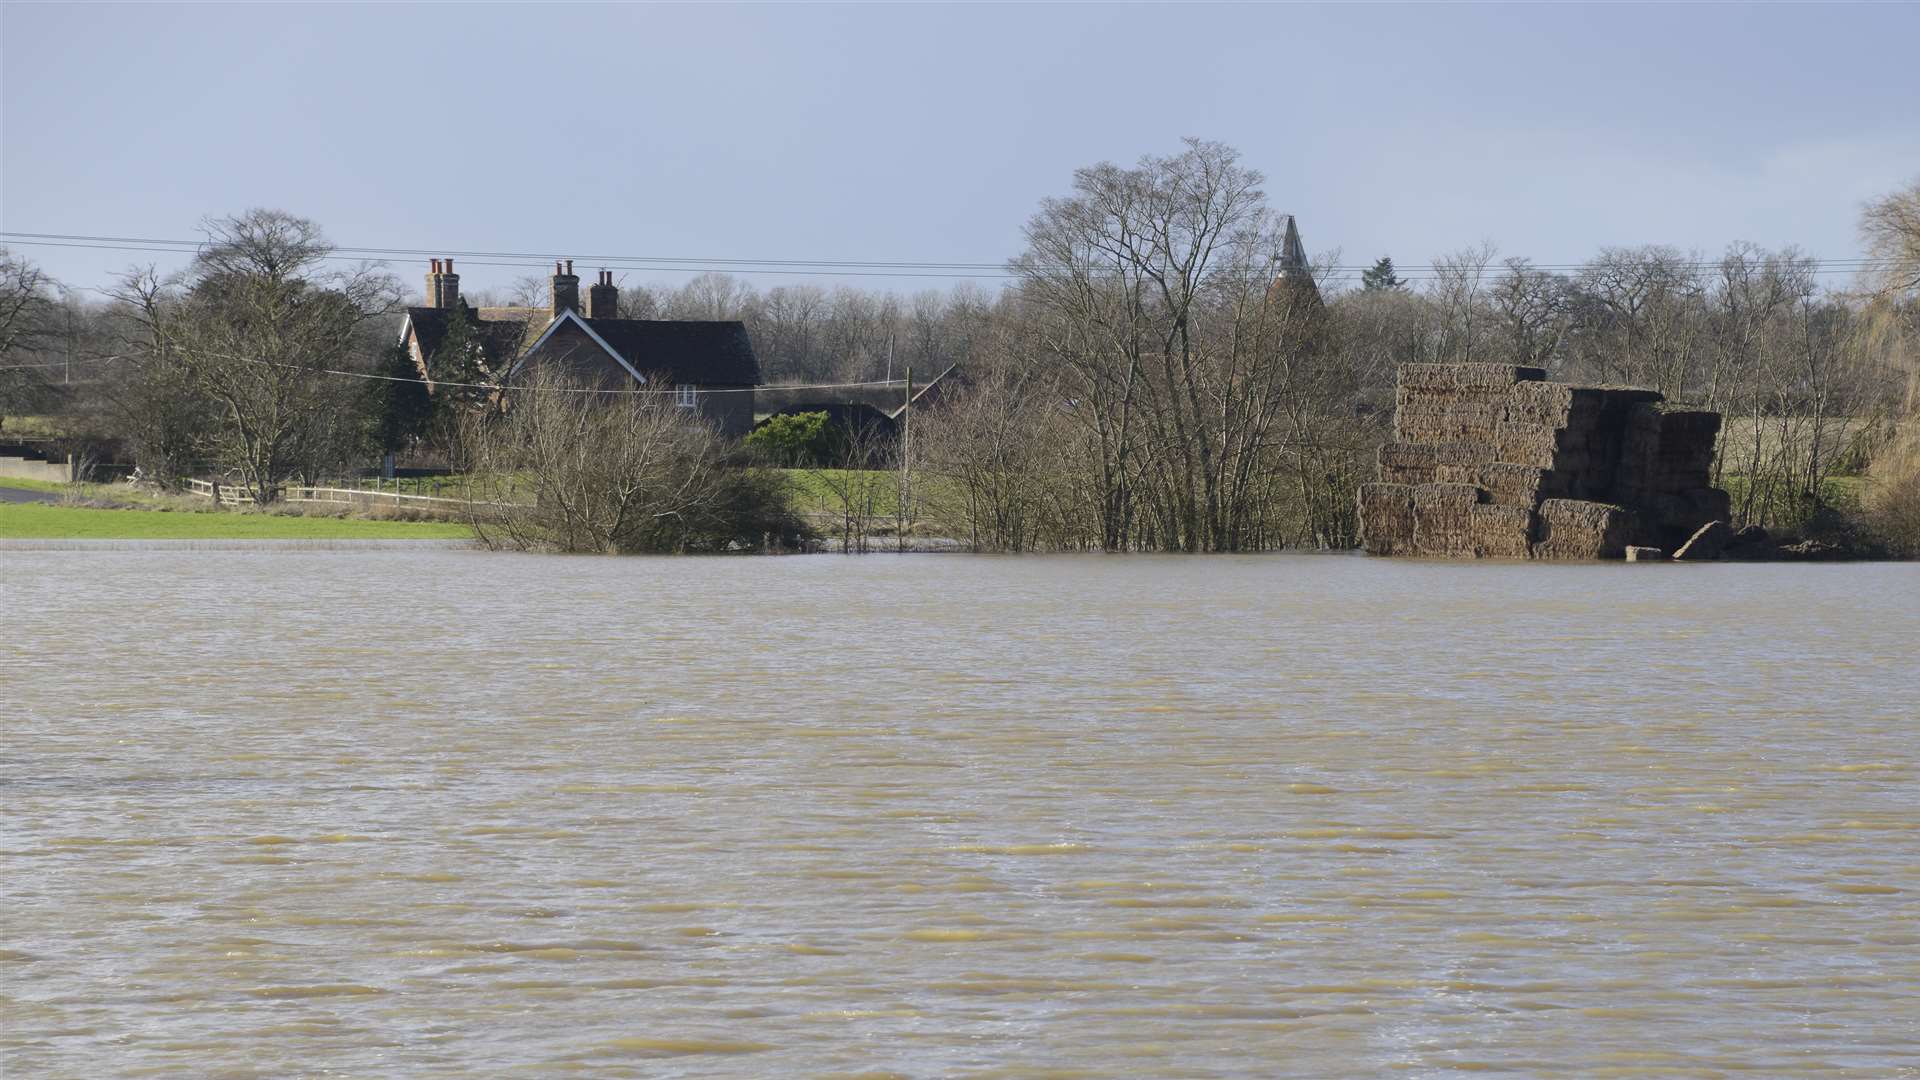 Hothfield Paddock farm was flooded in February